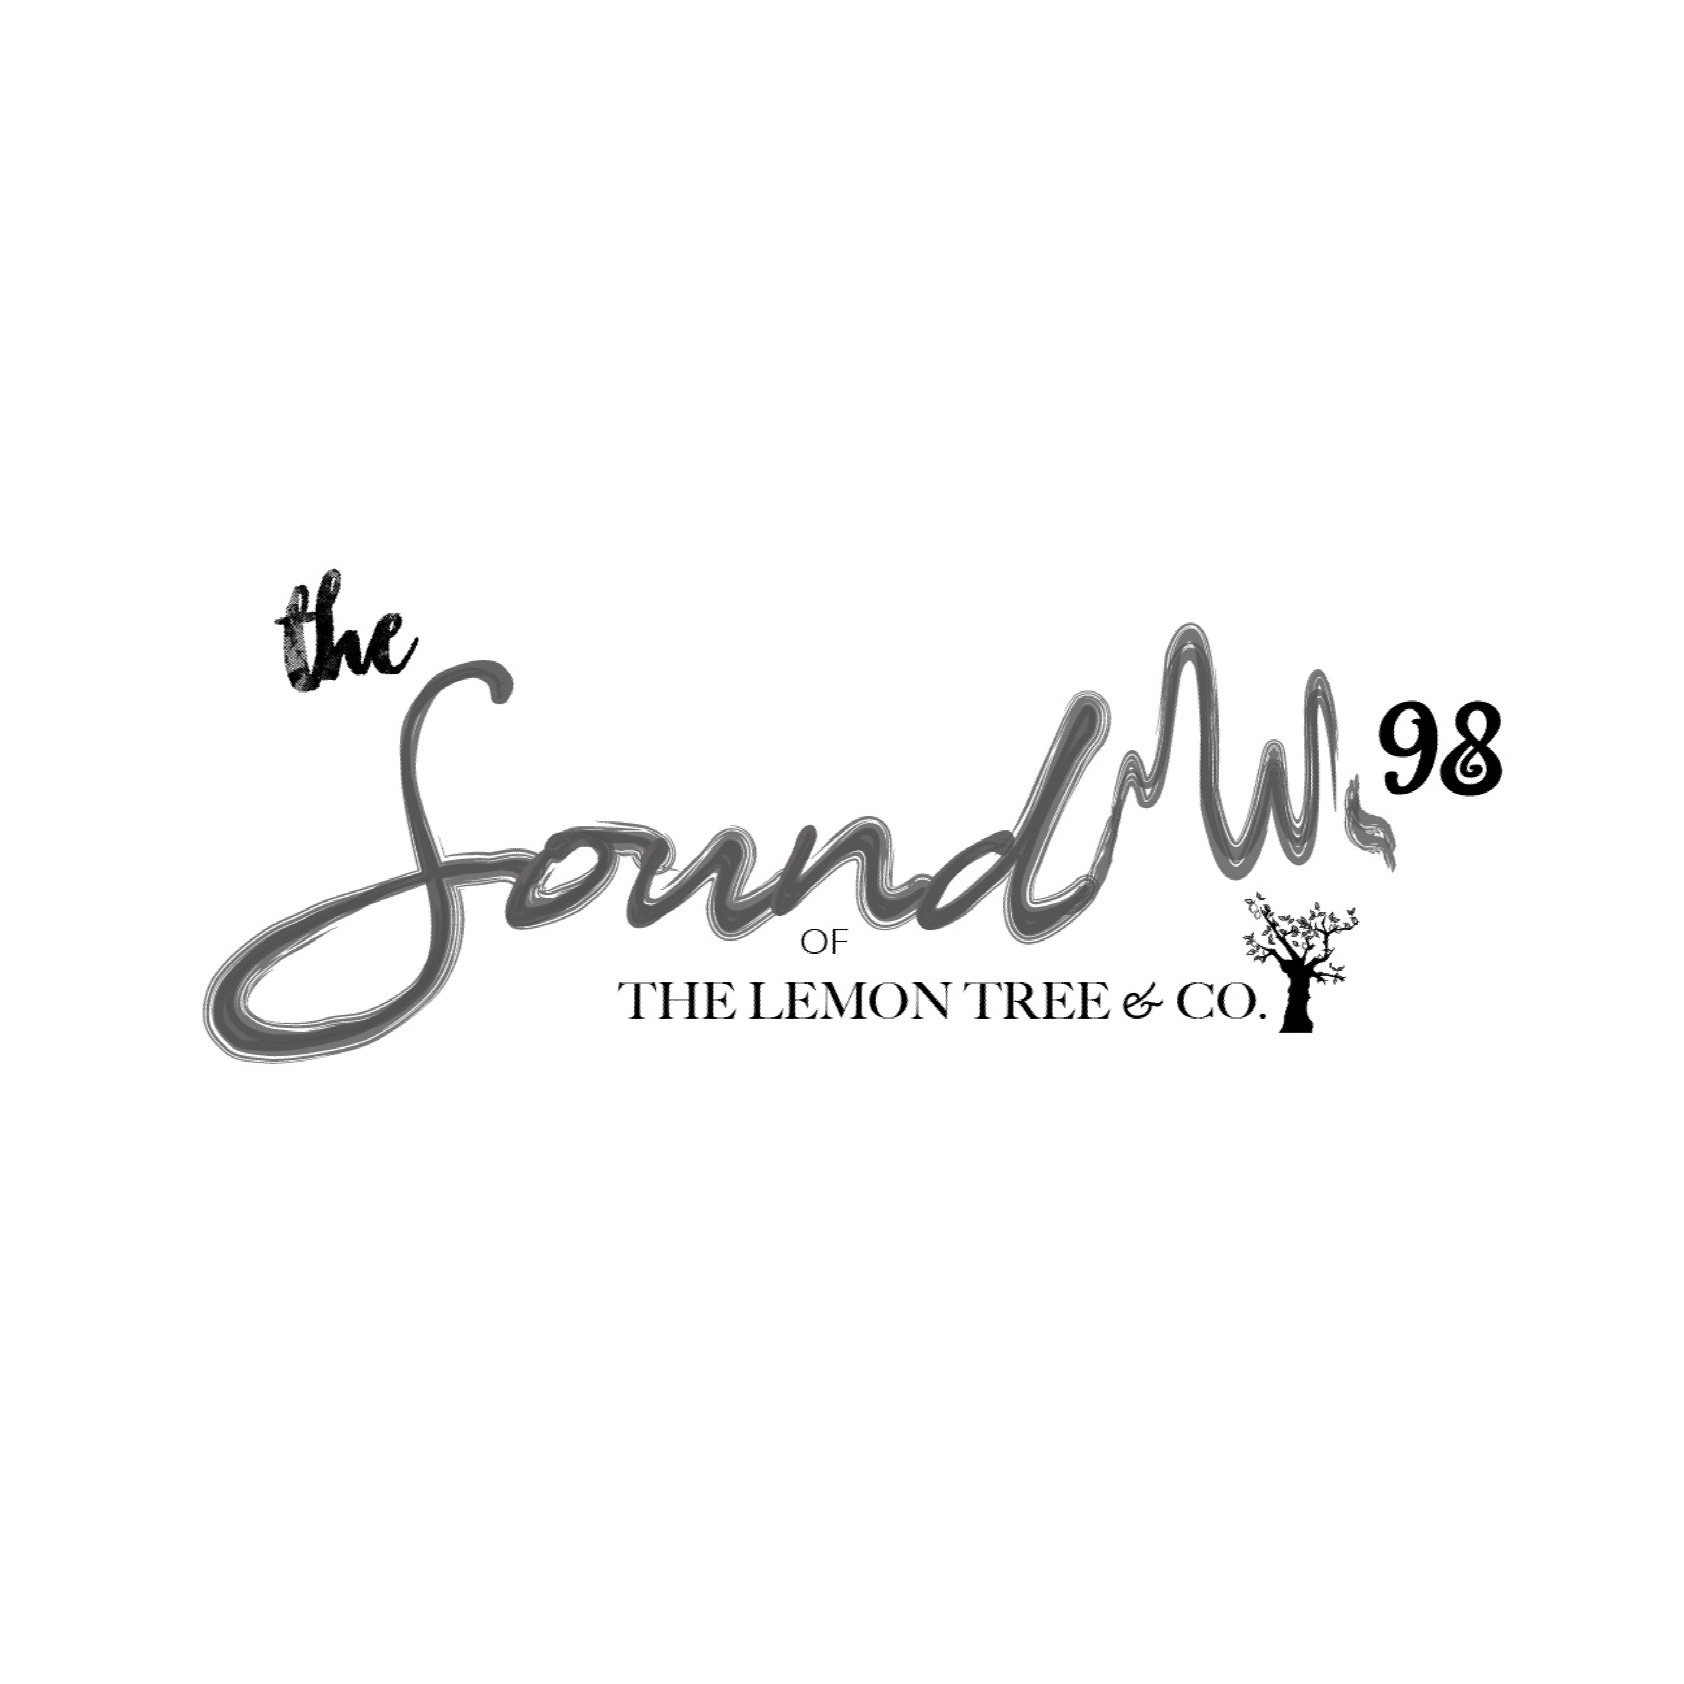 The Sound Of The Lemon Tree 98